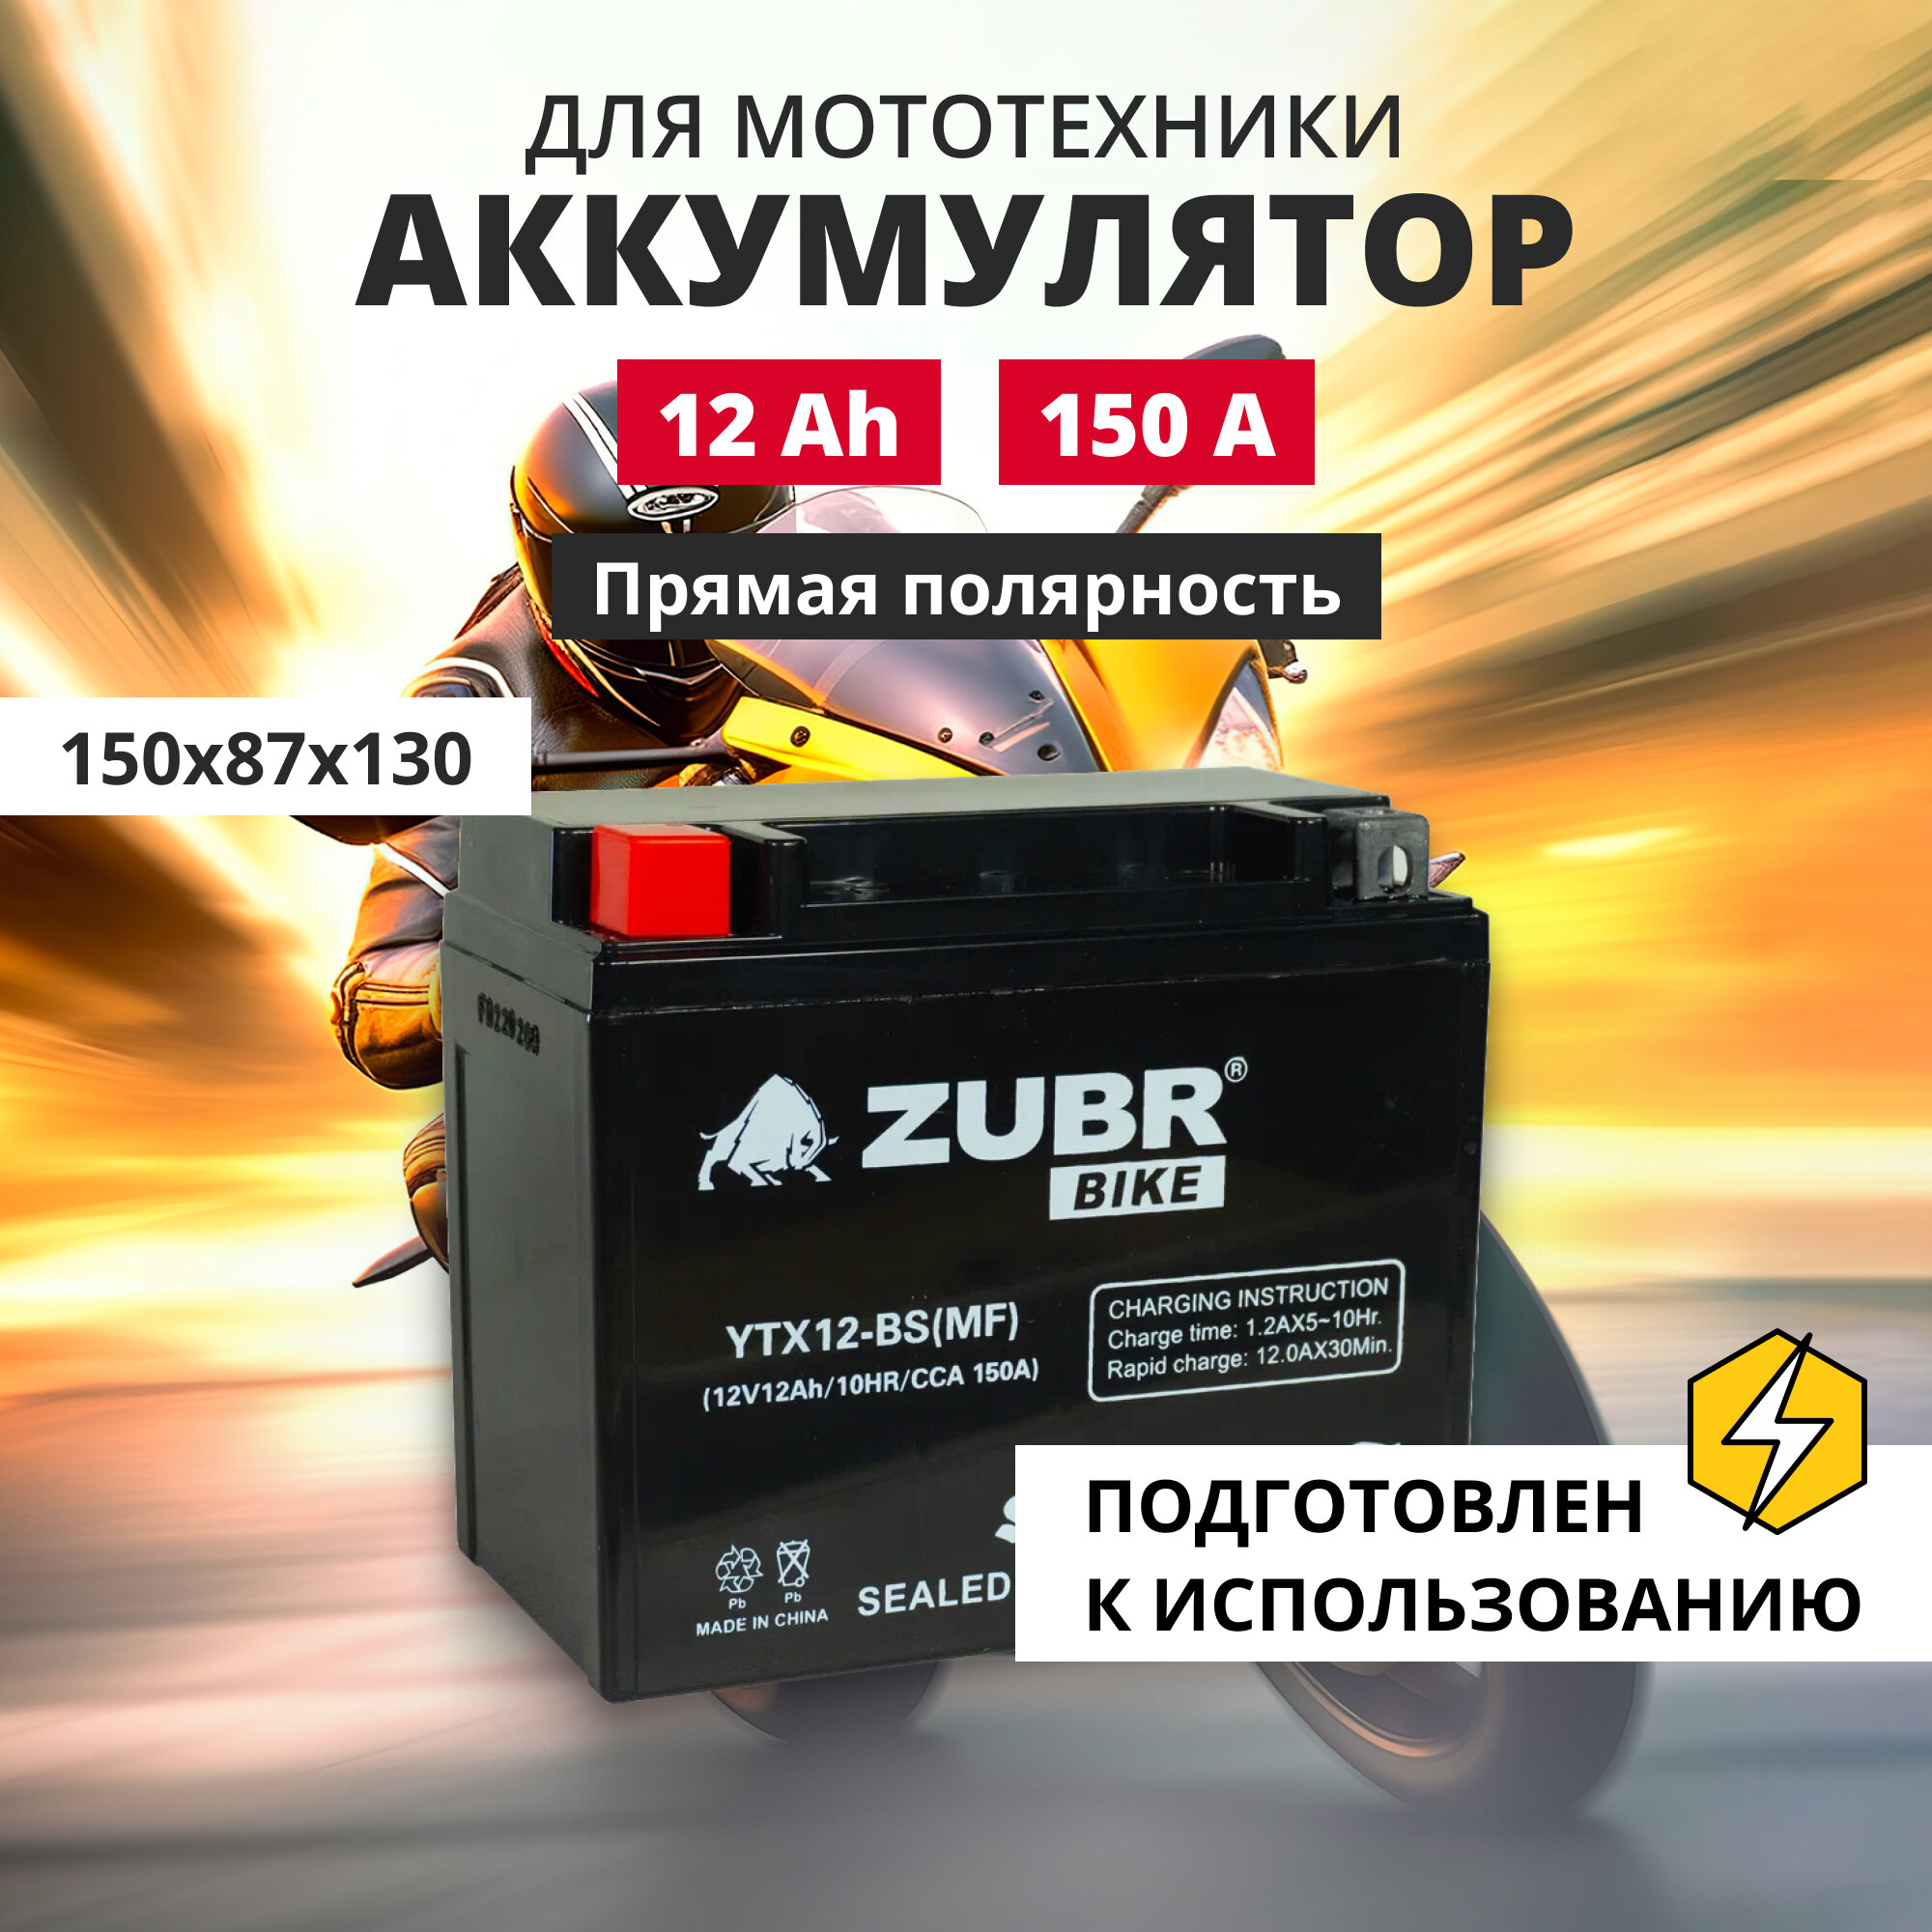 Аккумулятор для мотоцикла 12v ZUBR YTX12-BS(MF) прямая полярность 12 Ah 150 A AGM, акб на скутер, мопед, квадроцикл 150x87x130 мм